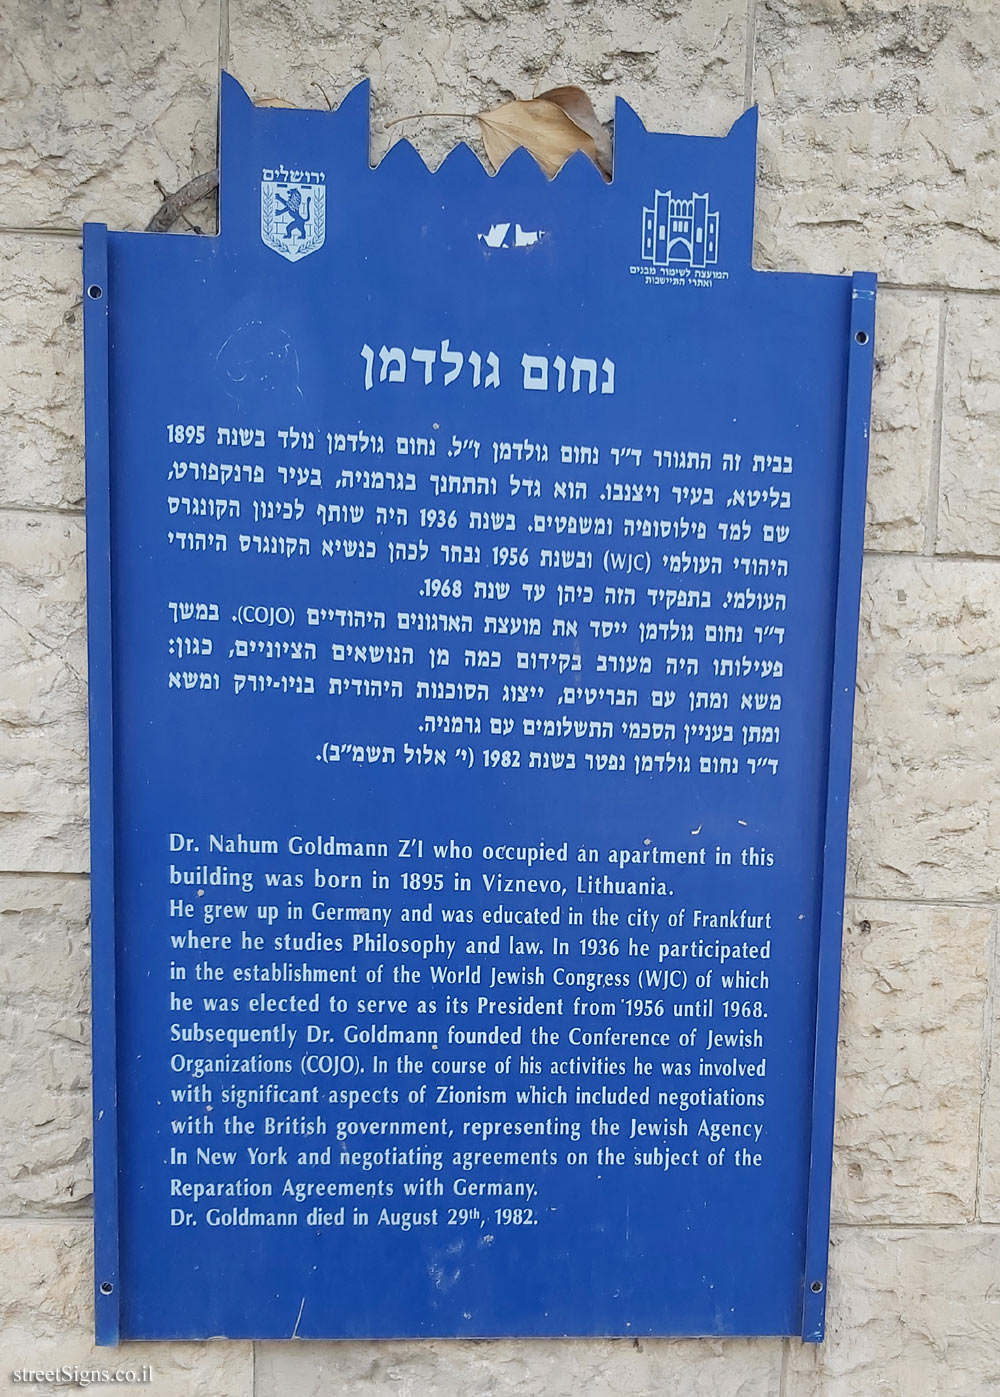 Jerusalem - Heritage Sites in Israel - The house where Nahum Goldmann lived